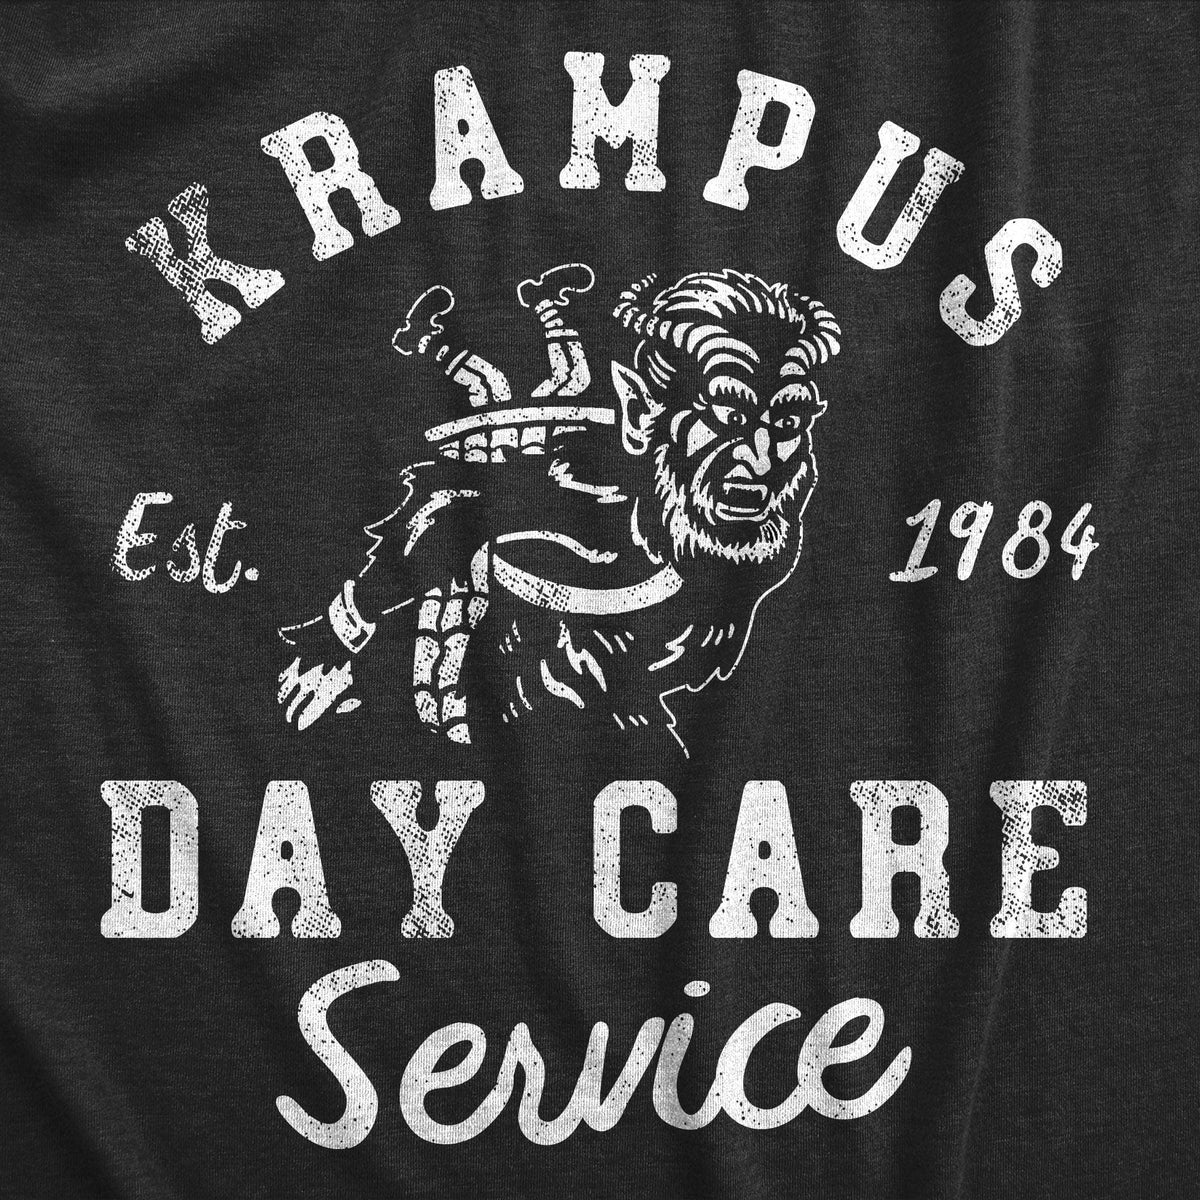 Krampus Day Care Service Men&#39;s Tshirt  -  Crazy Dog T-Shirts